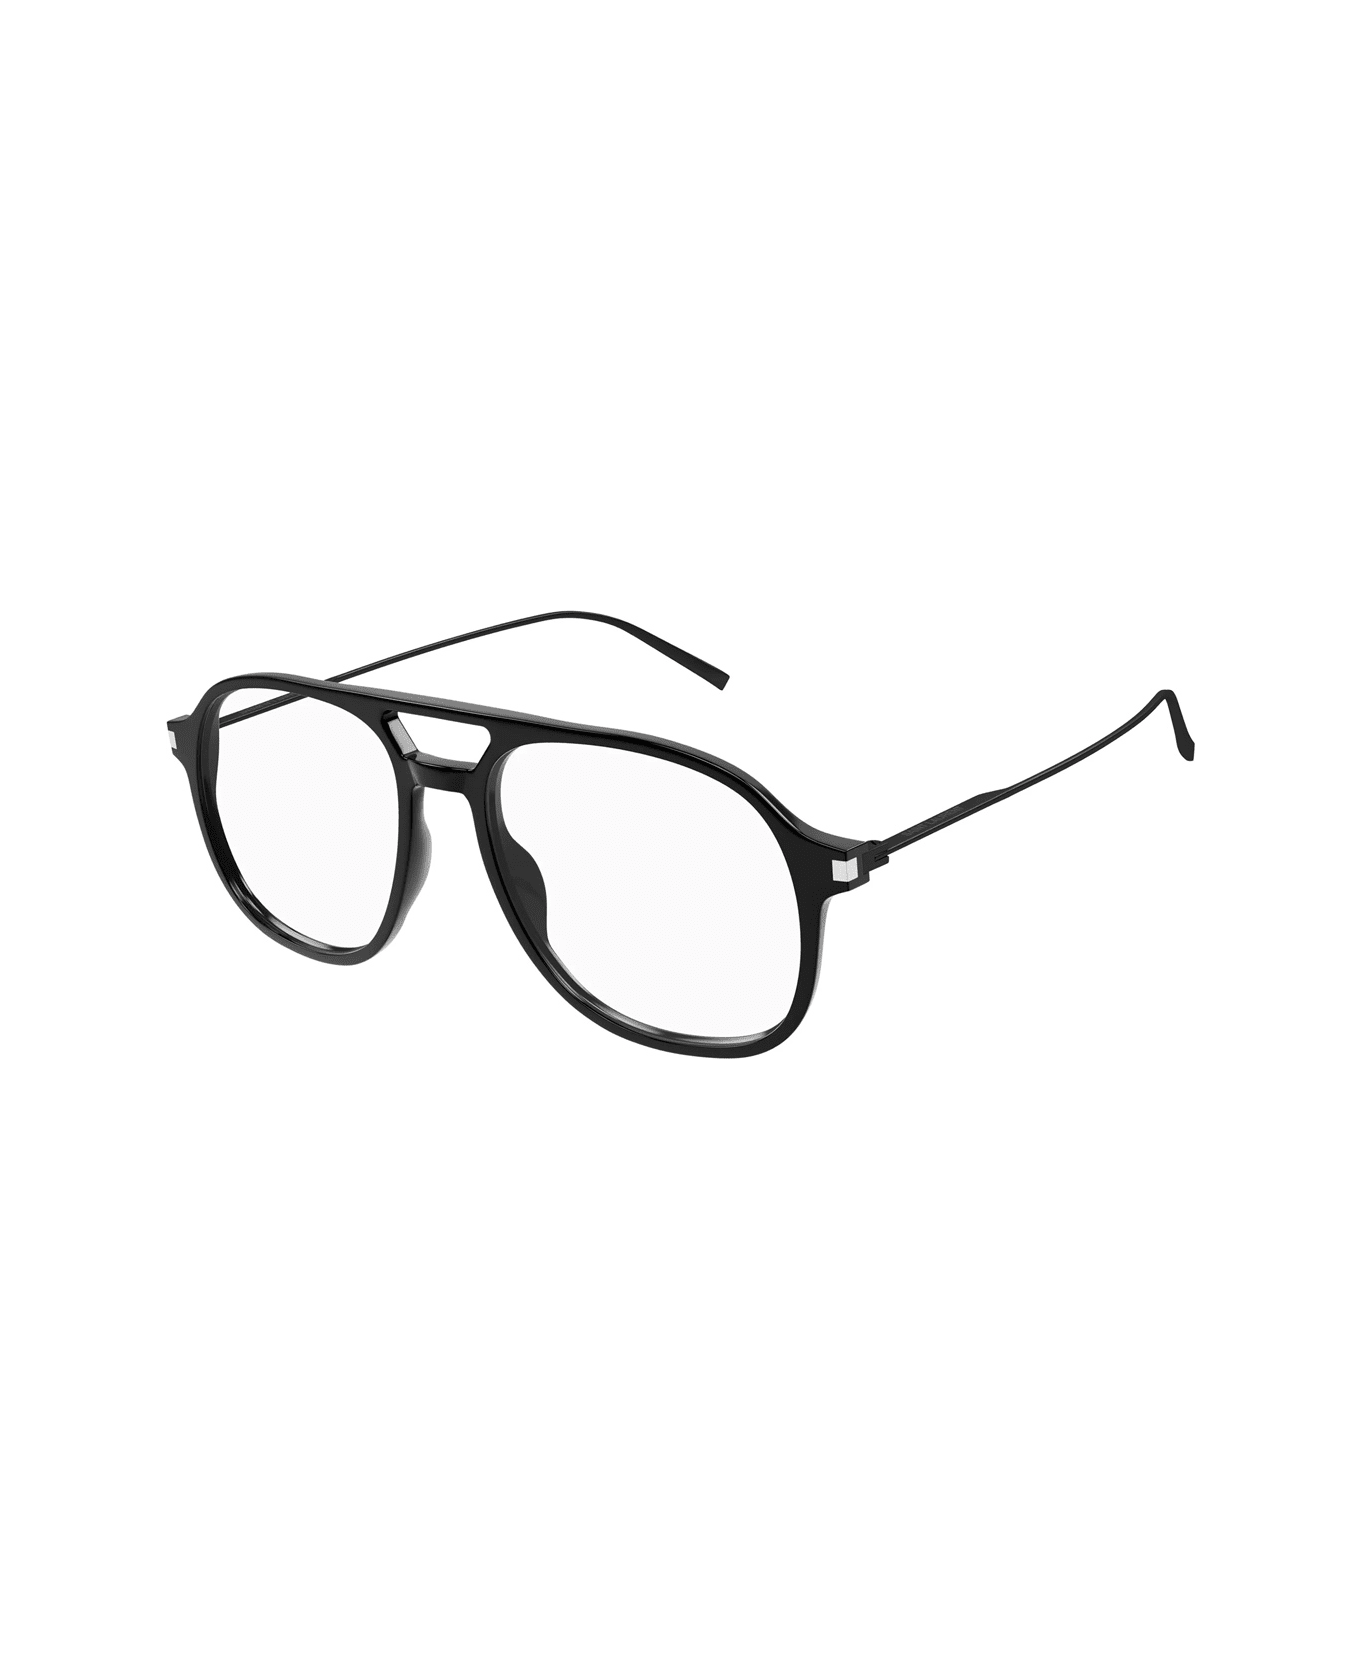 Saint Laurent Eyewear Sl 626 001 Glasses - Nero アイウェア